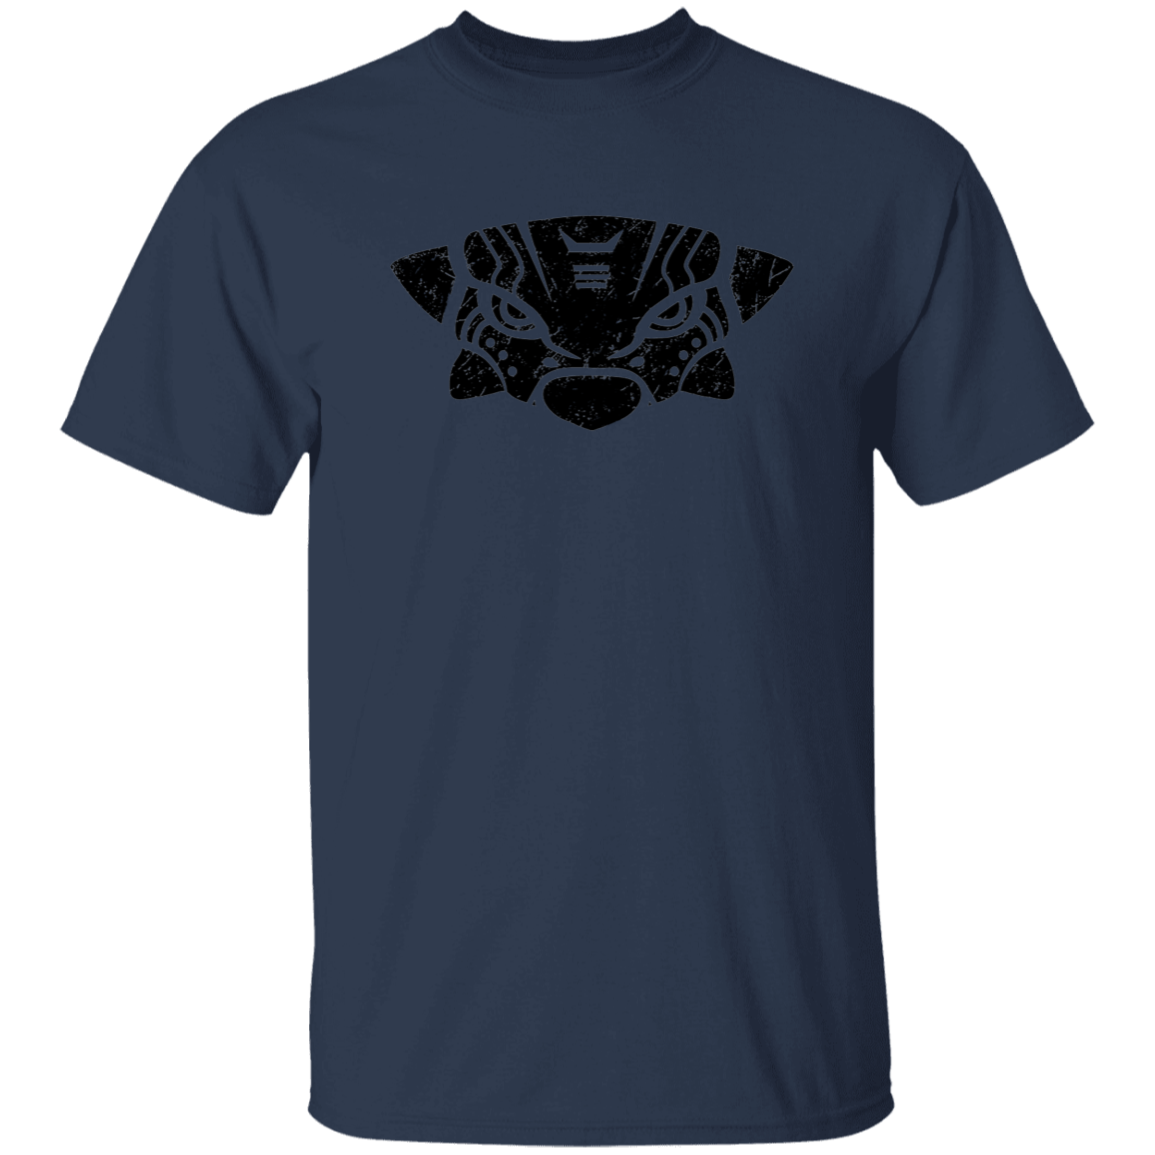 Black Distressed Emblem T-Shirt for Kids (Ankylosaurus/Grump)